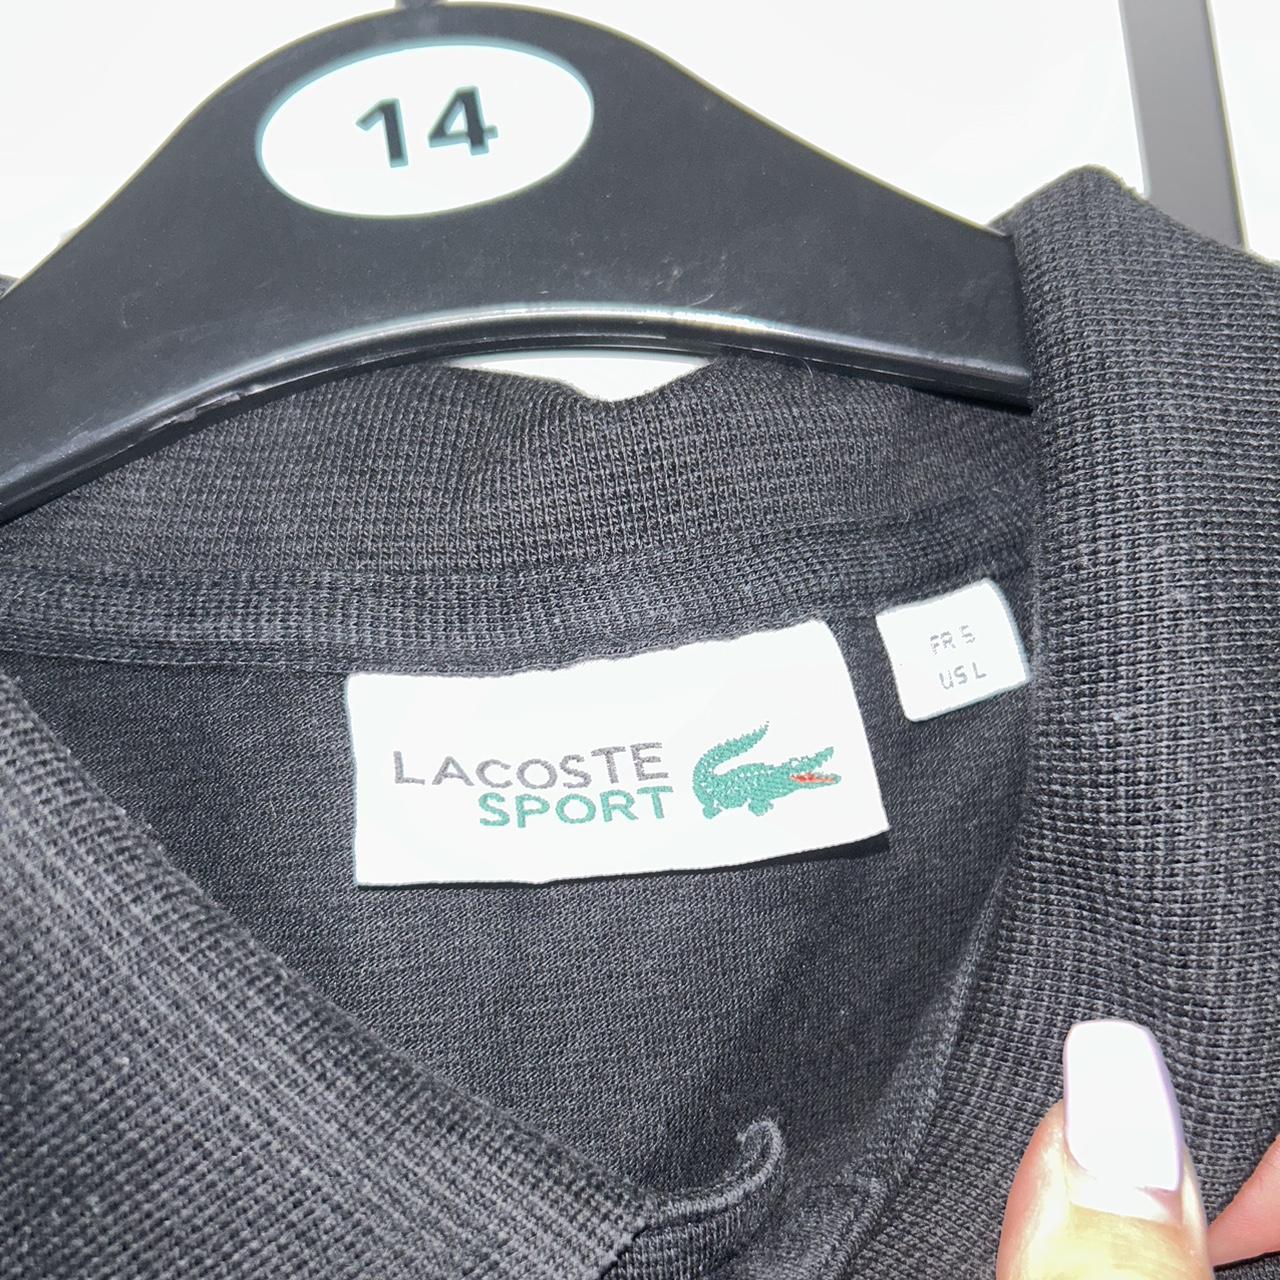 Black Lacoste sport polo shirt, worn once - Depop